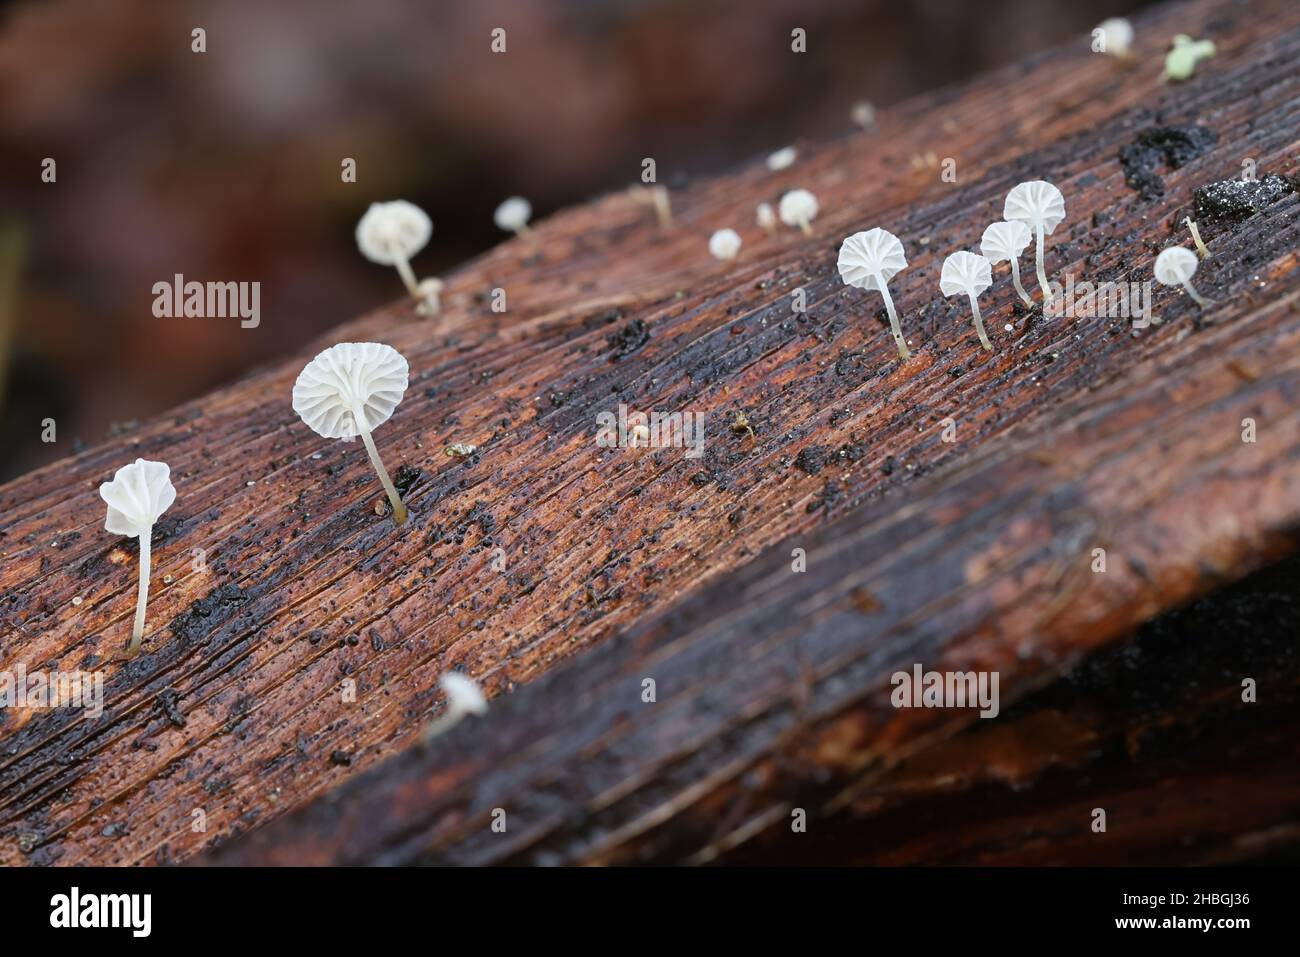 Mycena speirea, also called Phloeomana speirea, commonly known as bark bonnet, wild mushroom from Finland Stock Photo